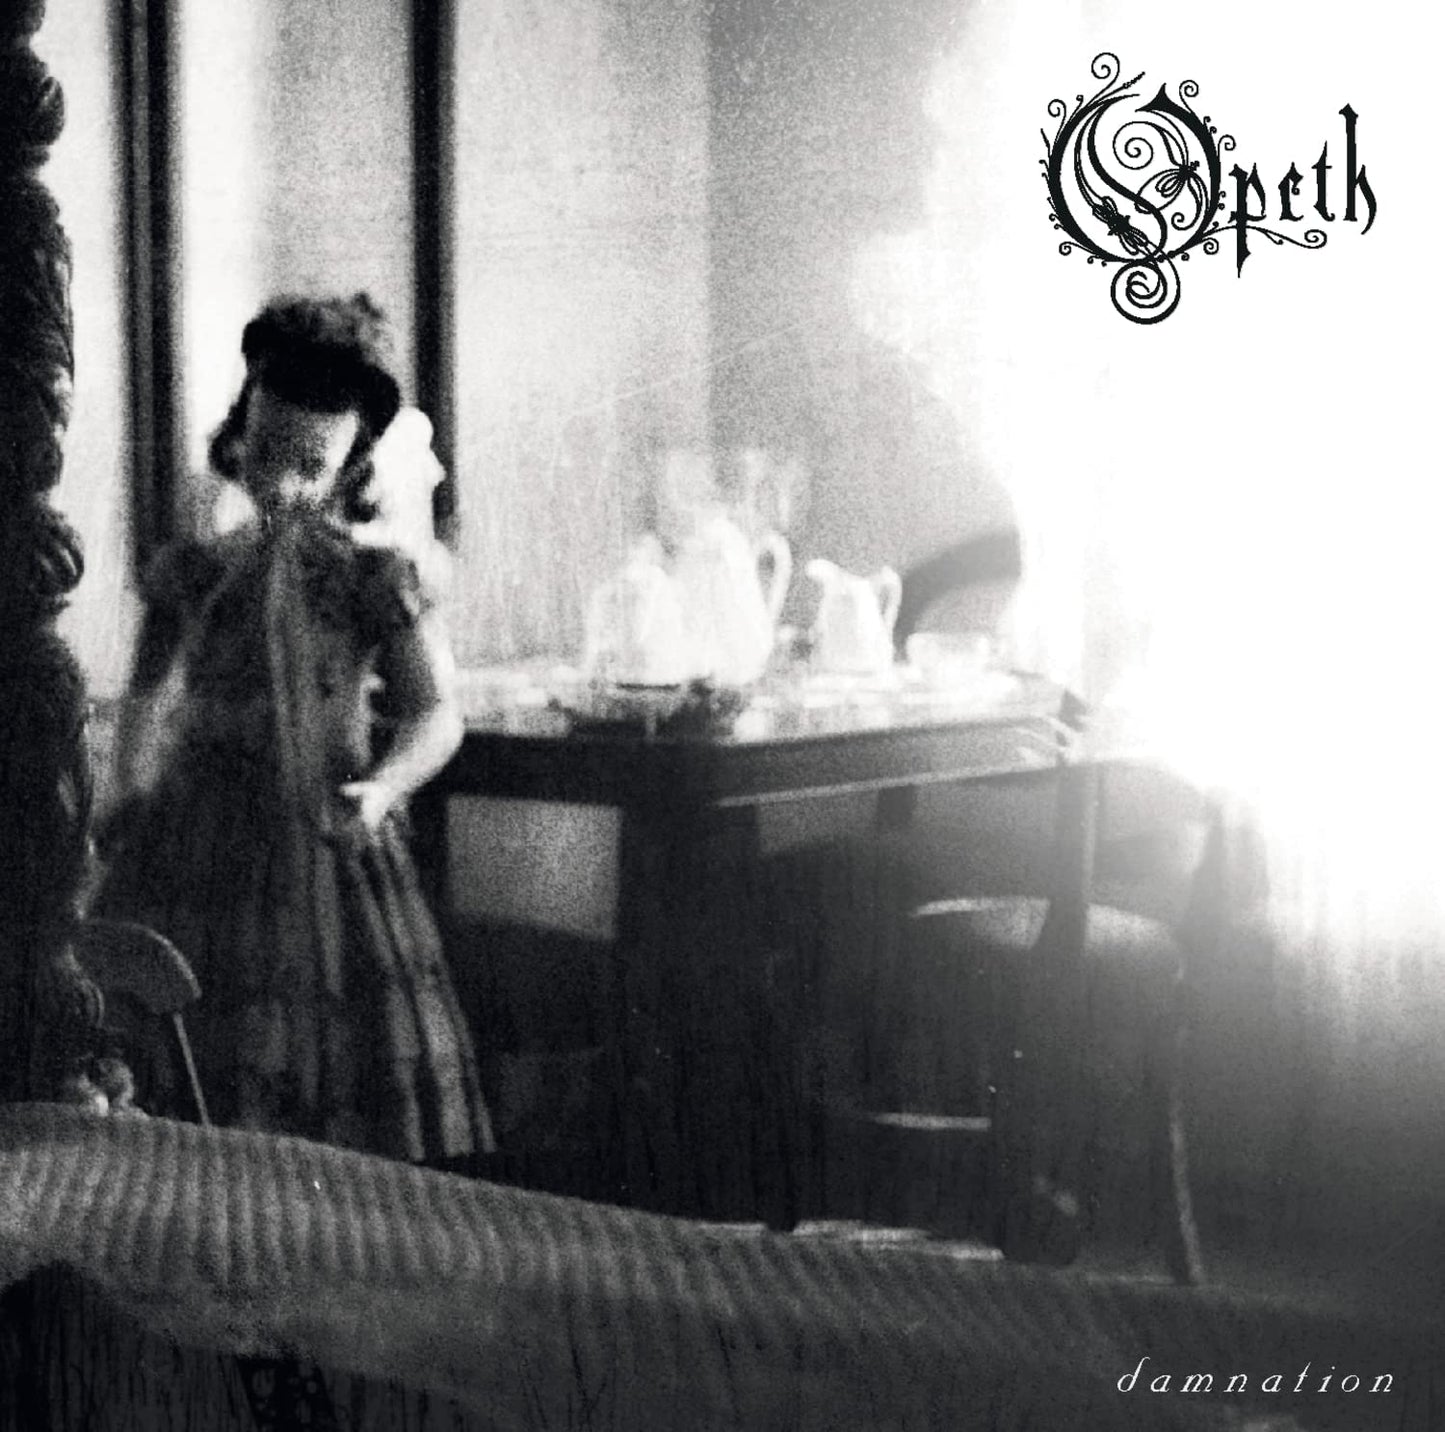 CD - Opeth - Damnation